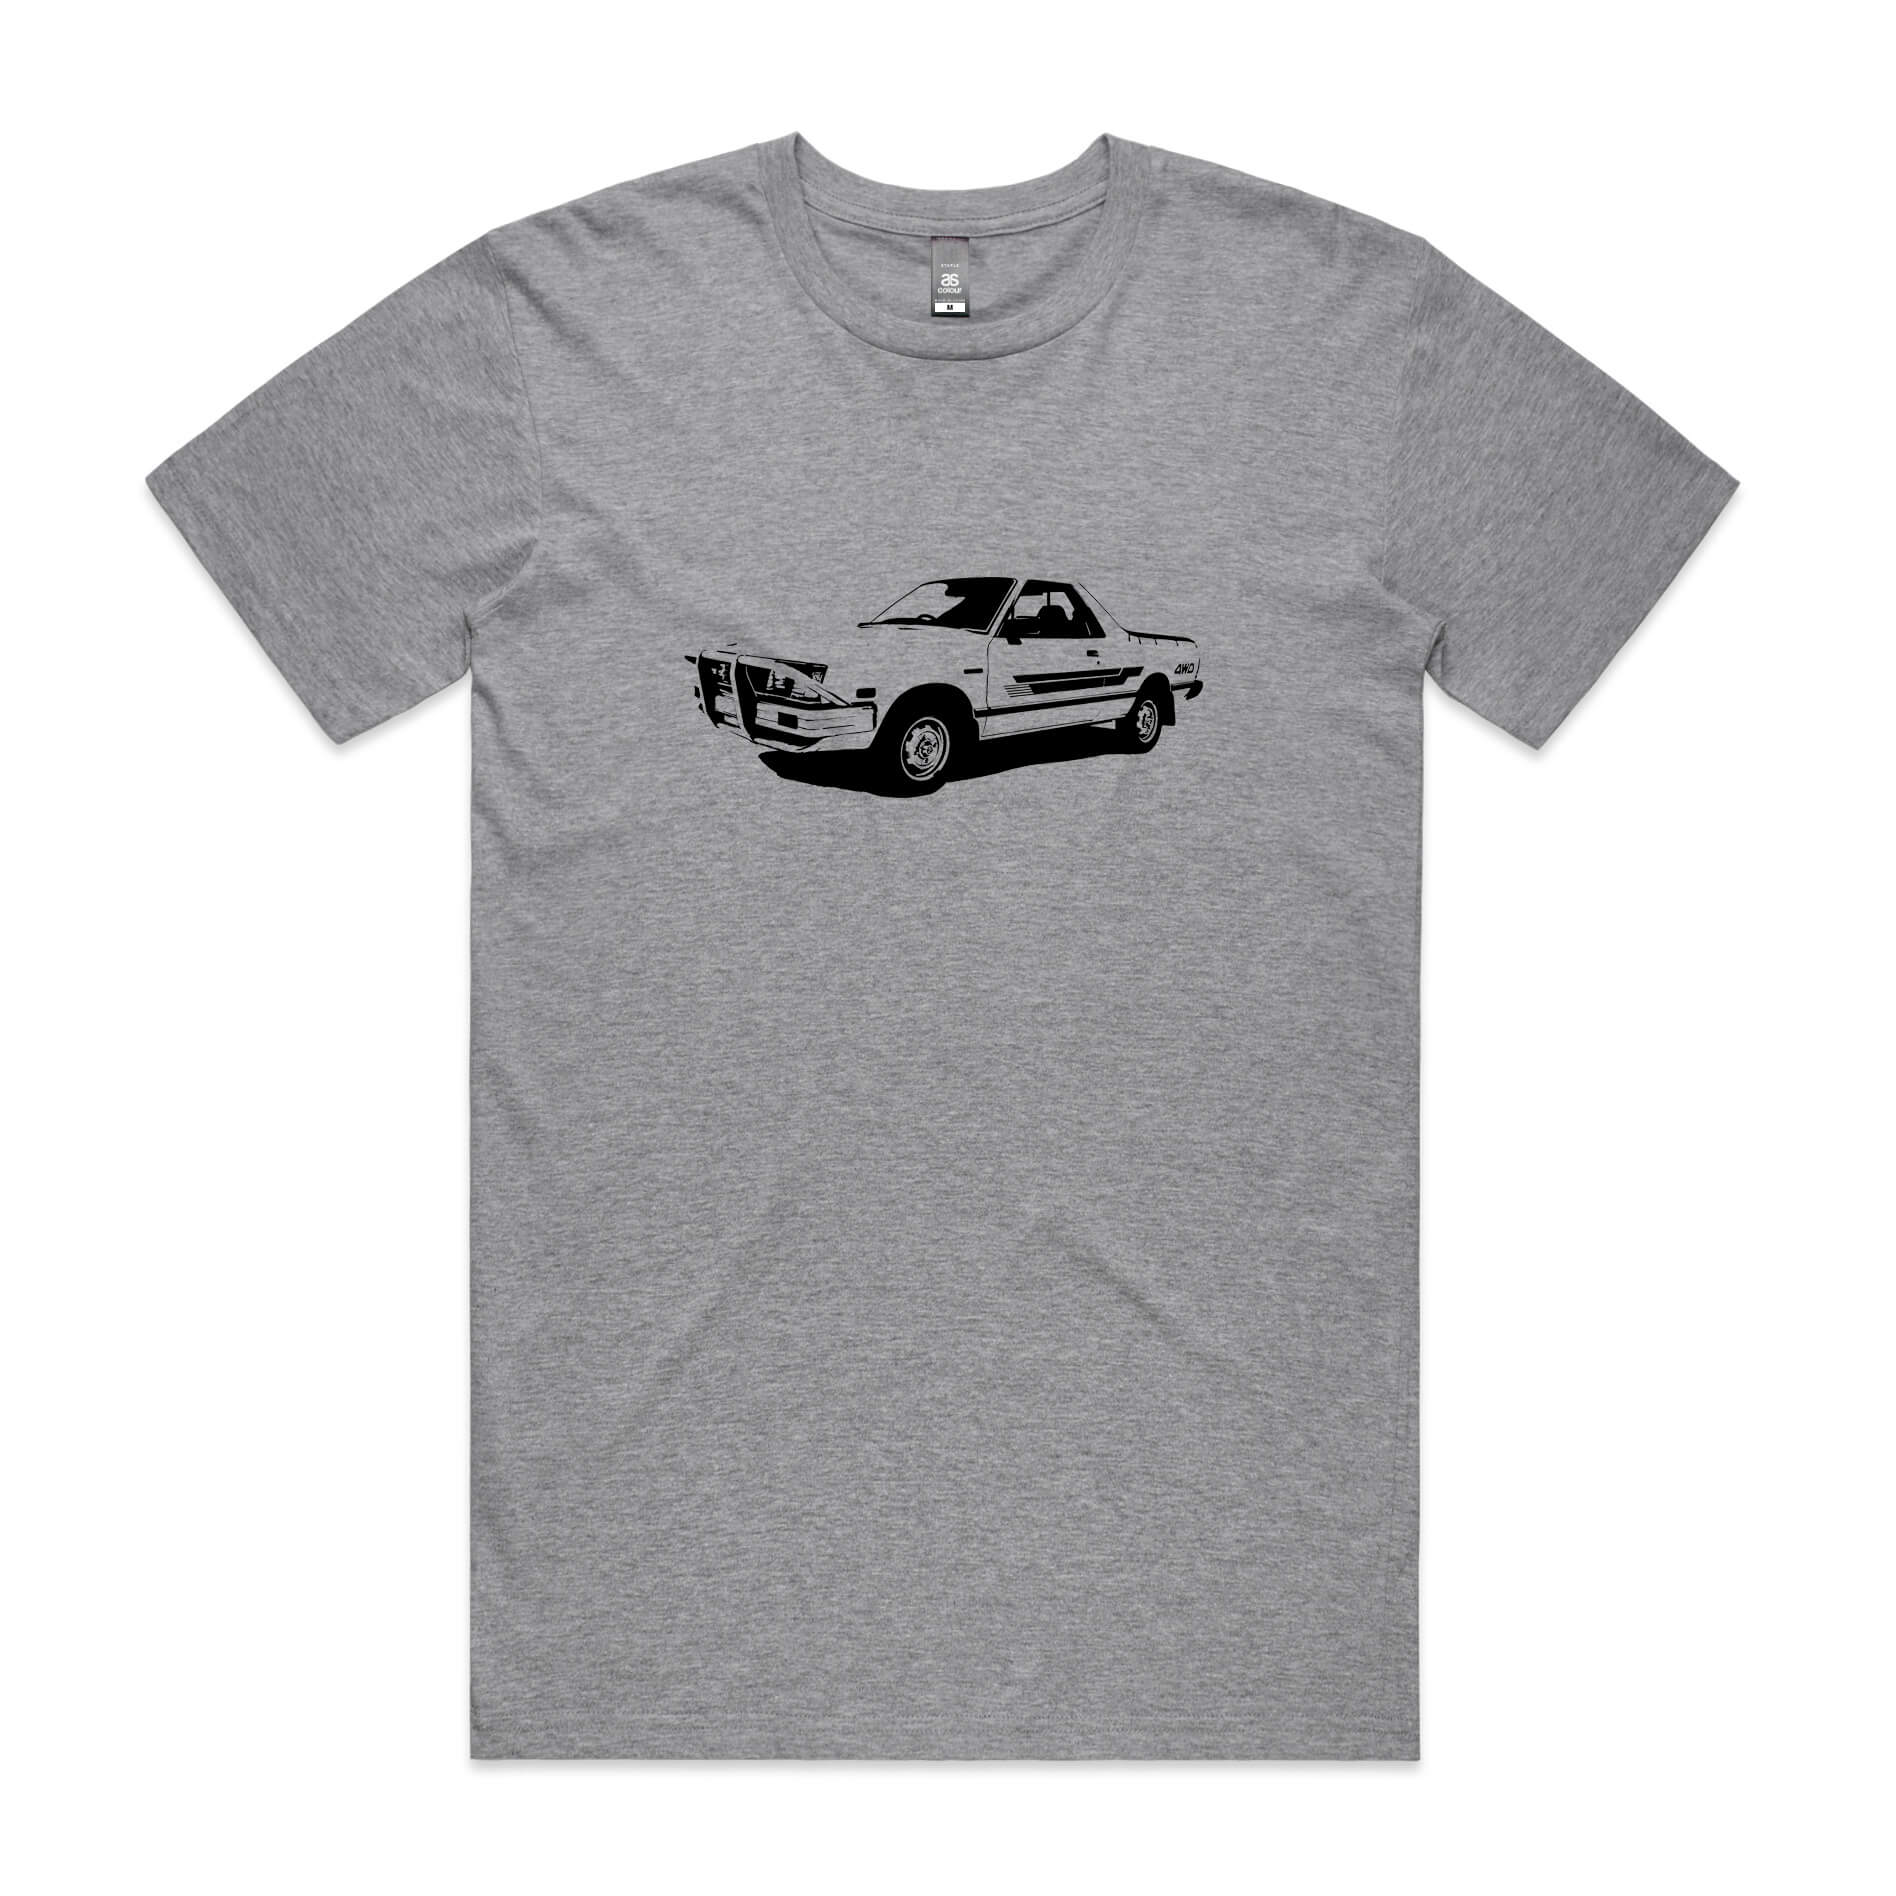 Subaru Brumby t-shirt in grey with black ute graphic